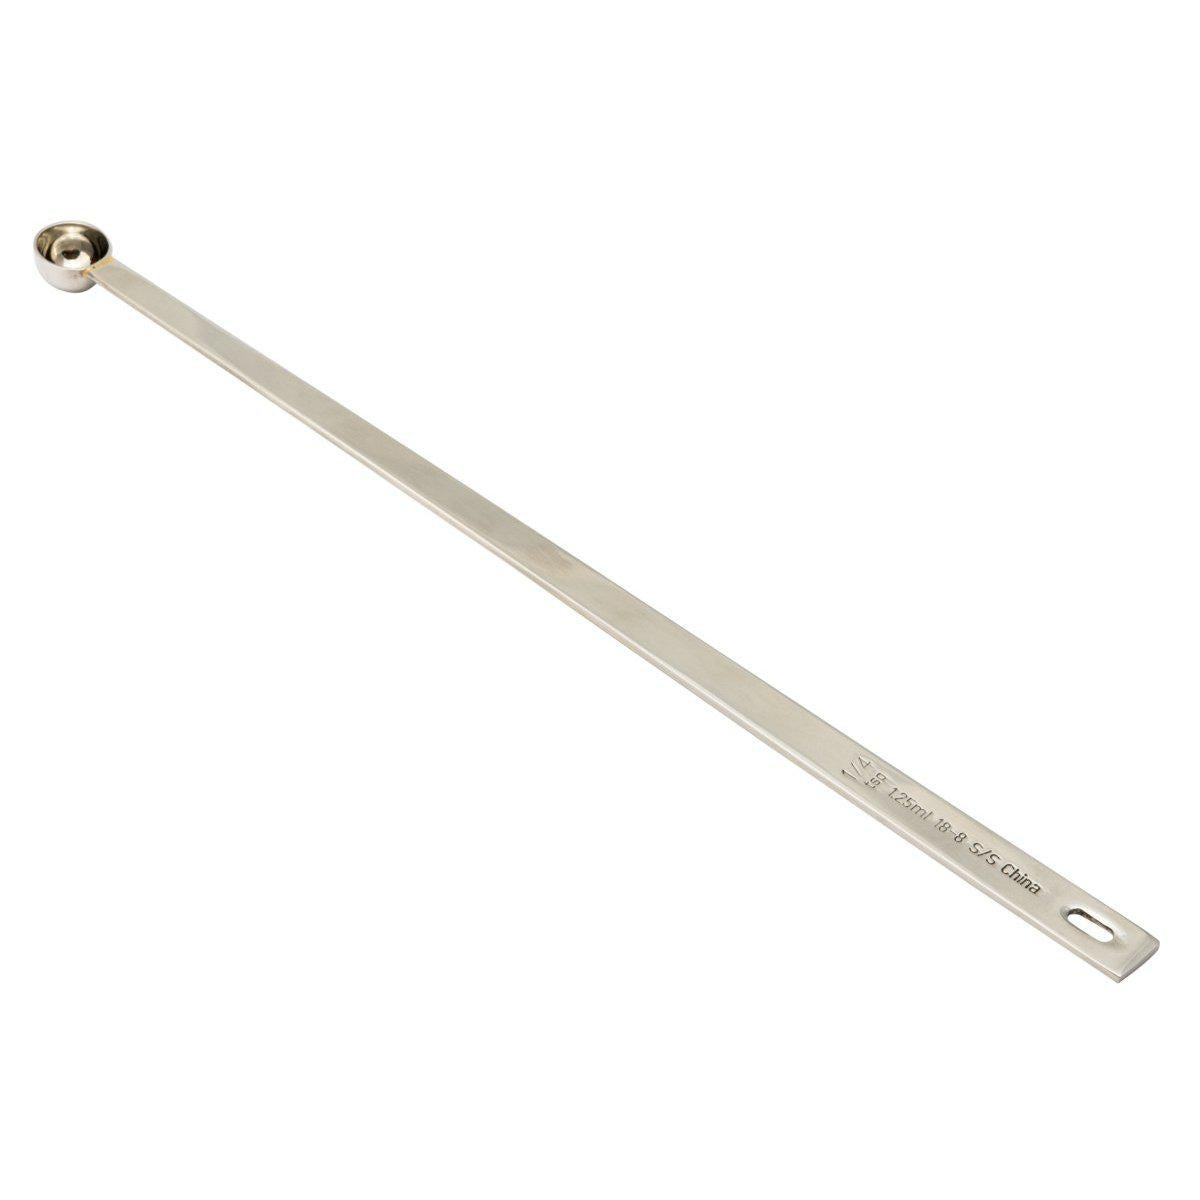 BERYLER® 1 Tablespoon Single Measuring Spoon, Stainless Steel Individual  Spoons, Long Handle Spoons Only 1 tbsp(15 ml)